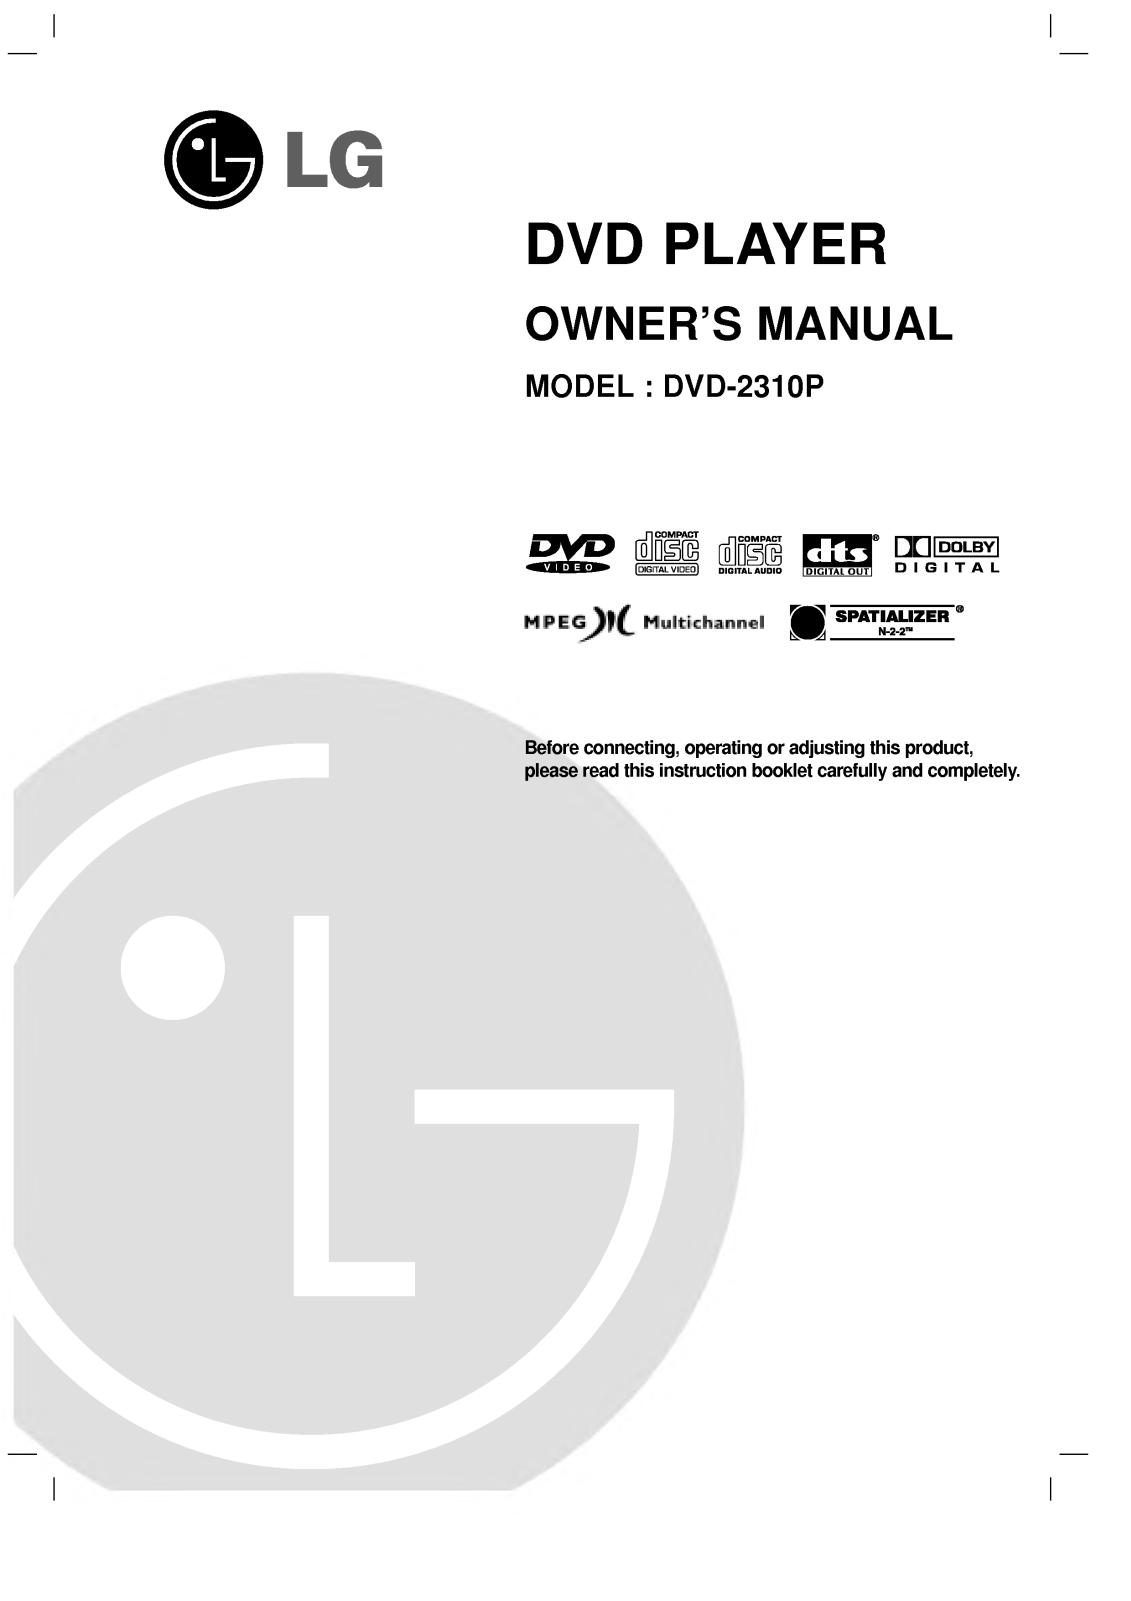 LG DVD-2310P User Manual